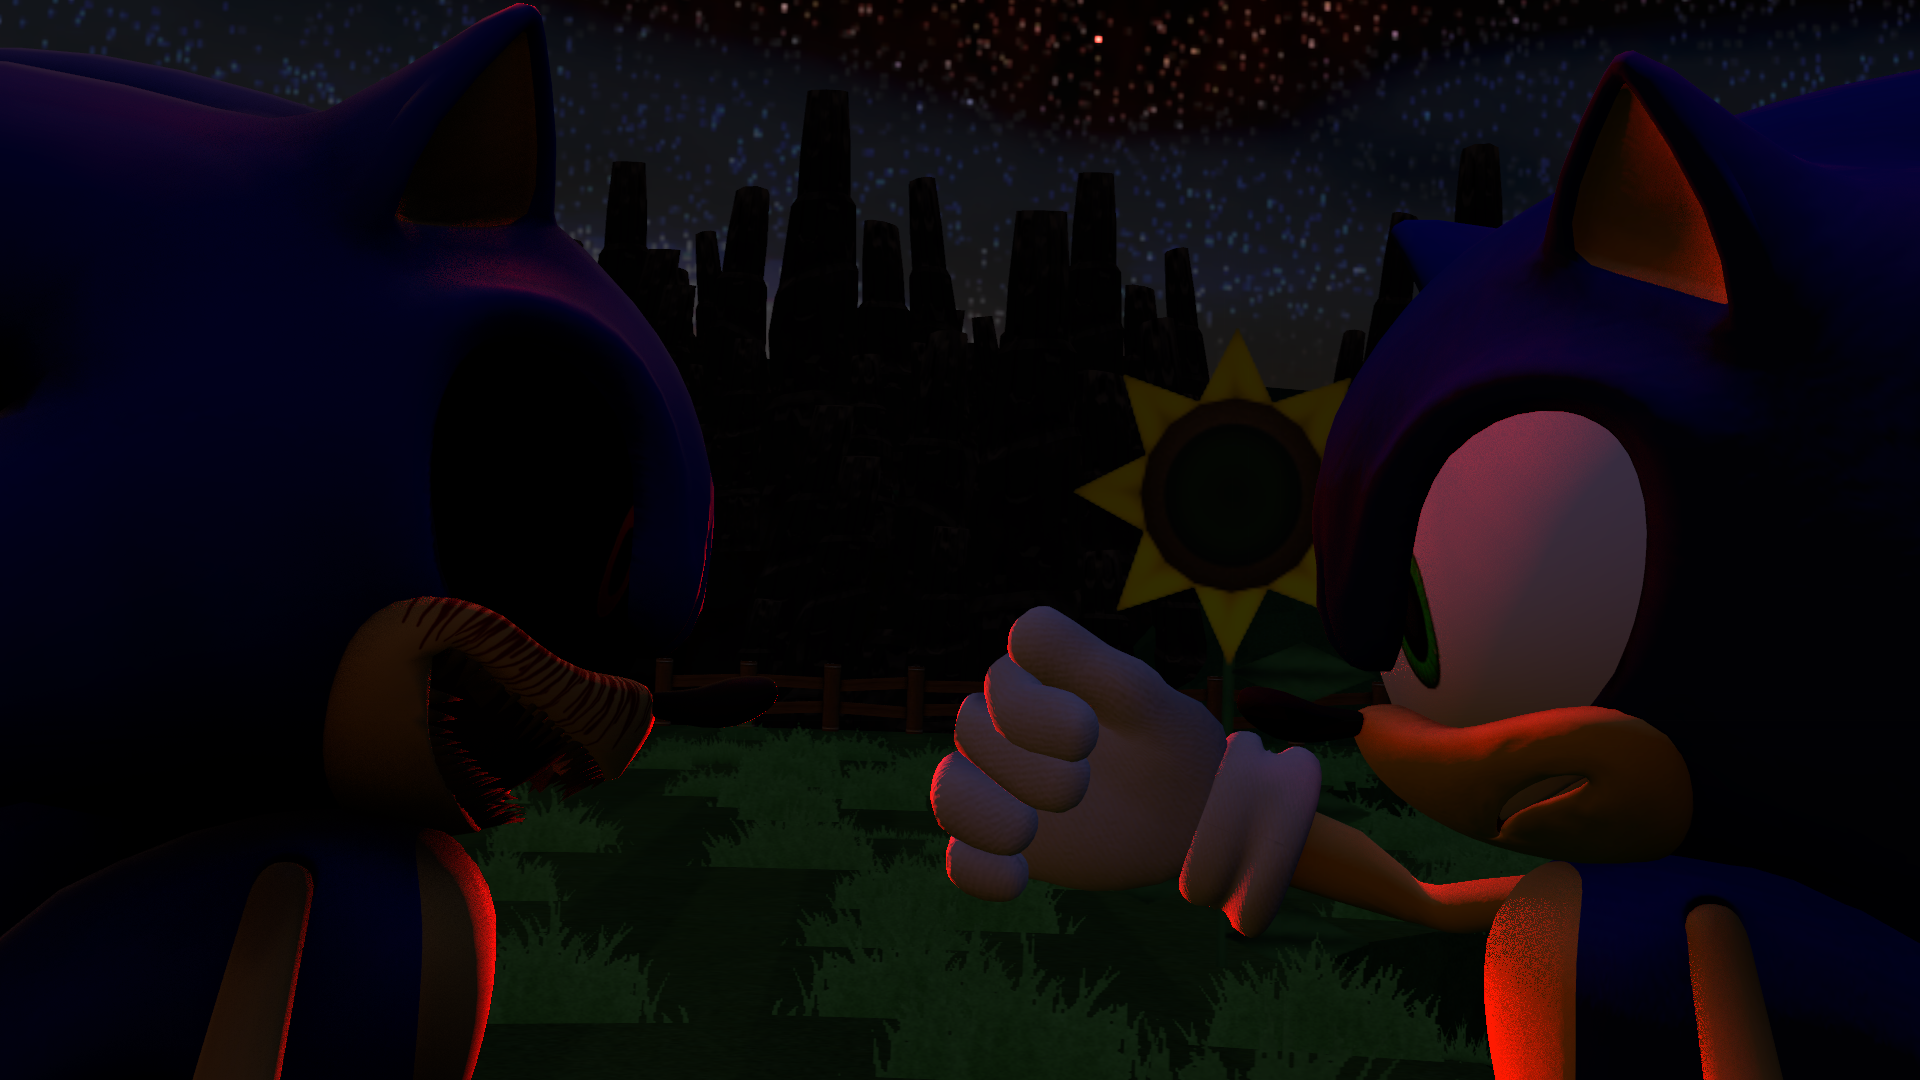 SFM SERIES) Sonic.exe Season 2: Screenshot by SONIC5658 on DeviantArt